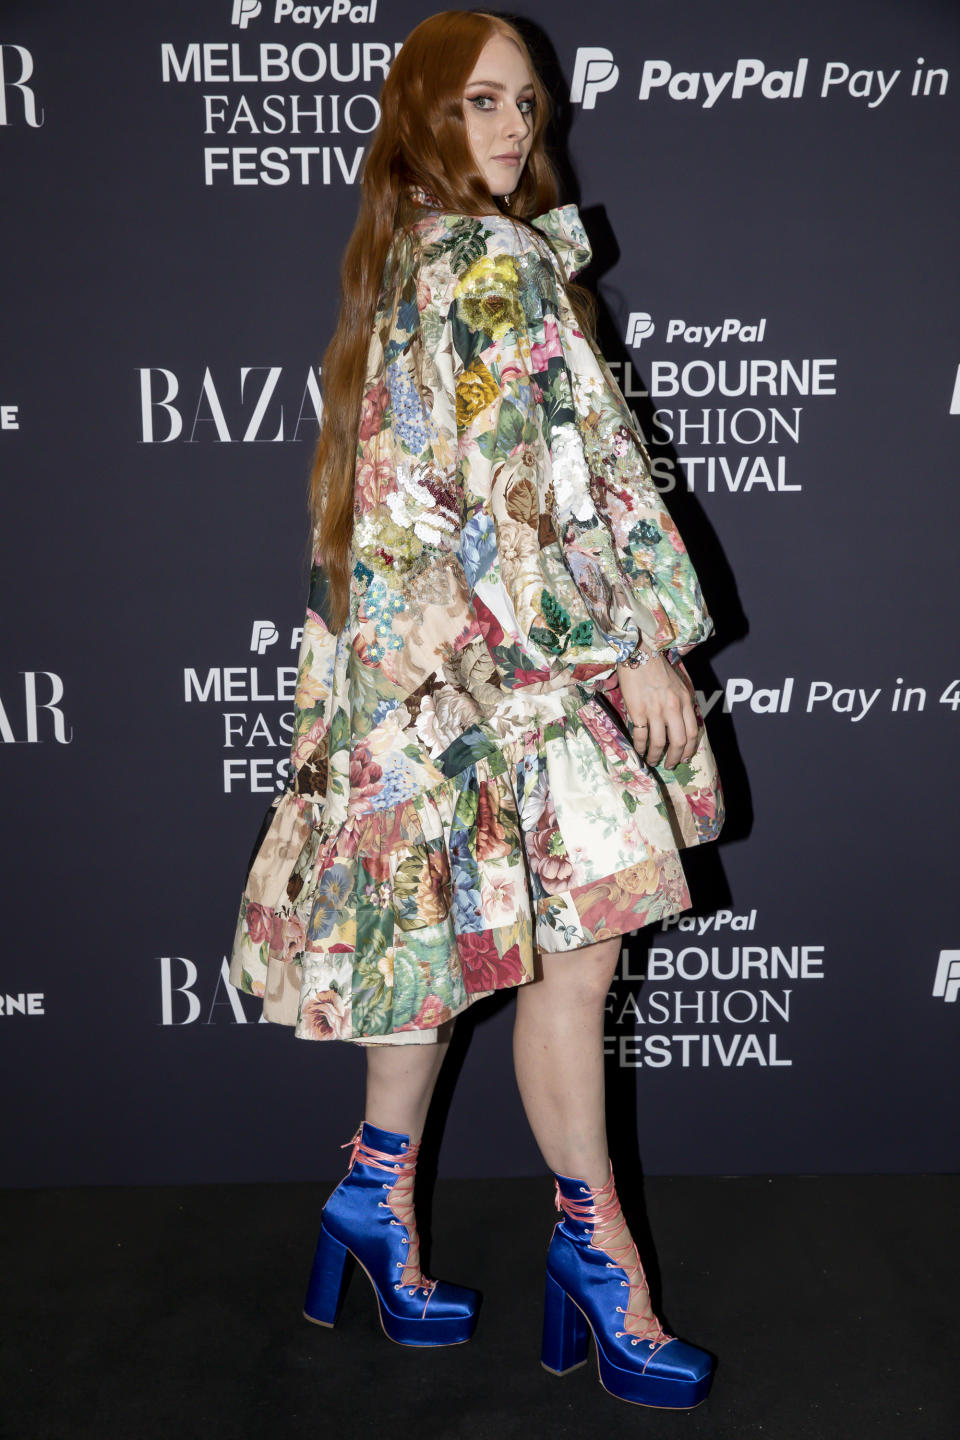 Vera Blue arrives at the Melbourne Fashion Festival Closing Runway sho